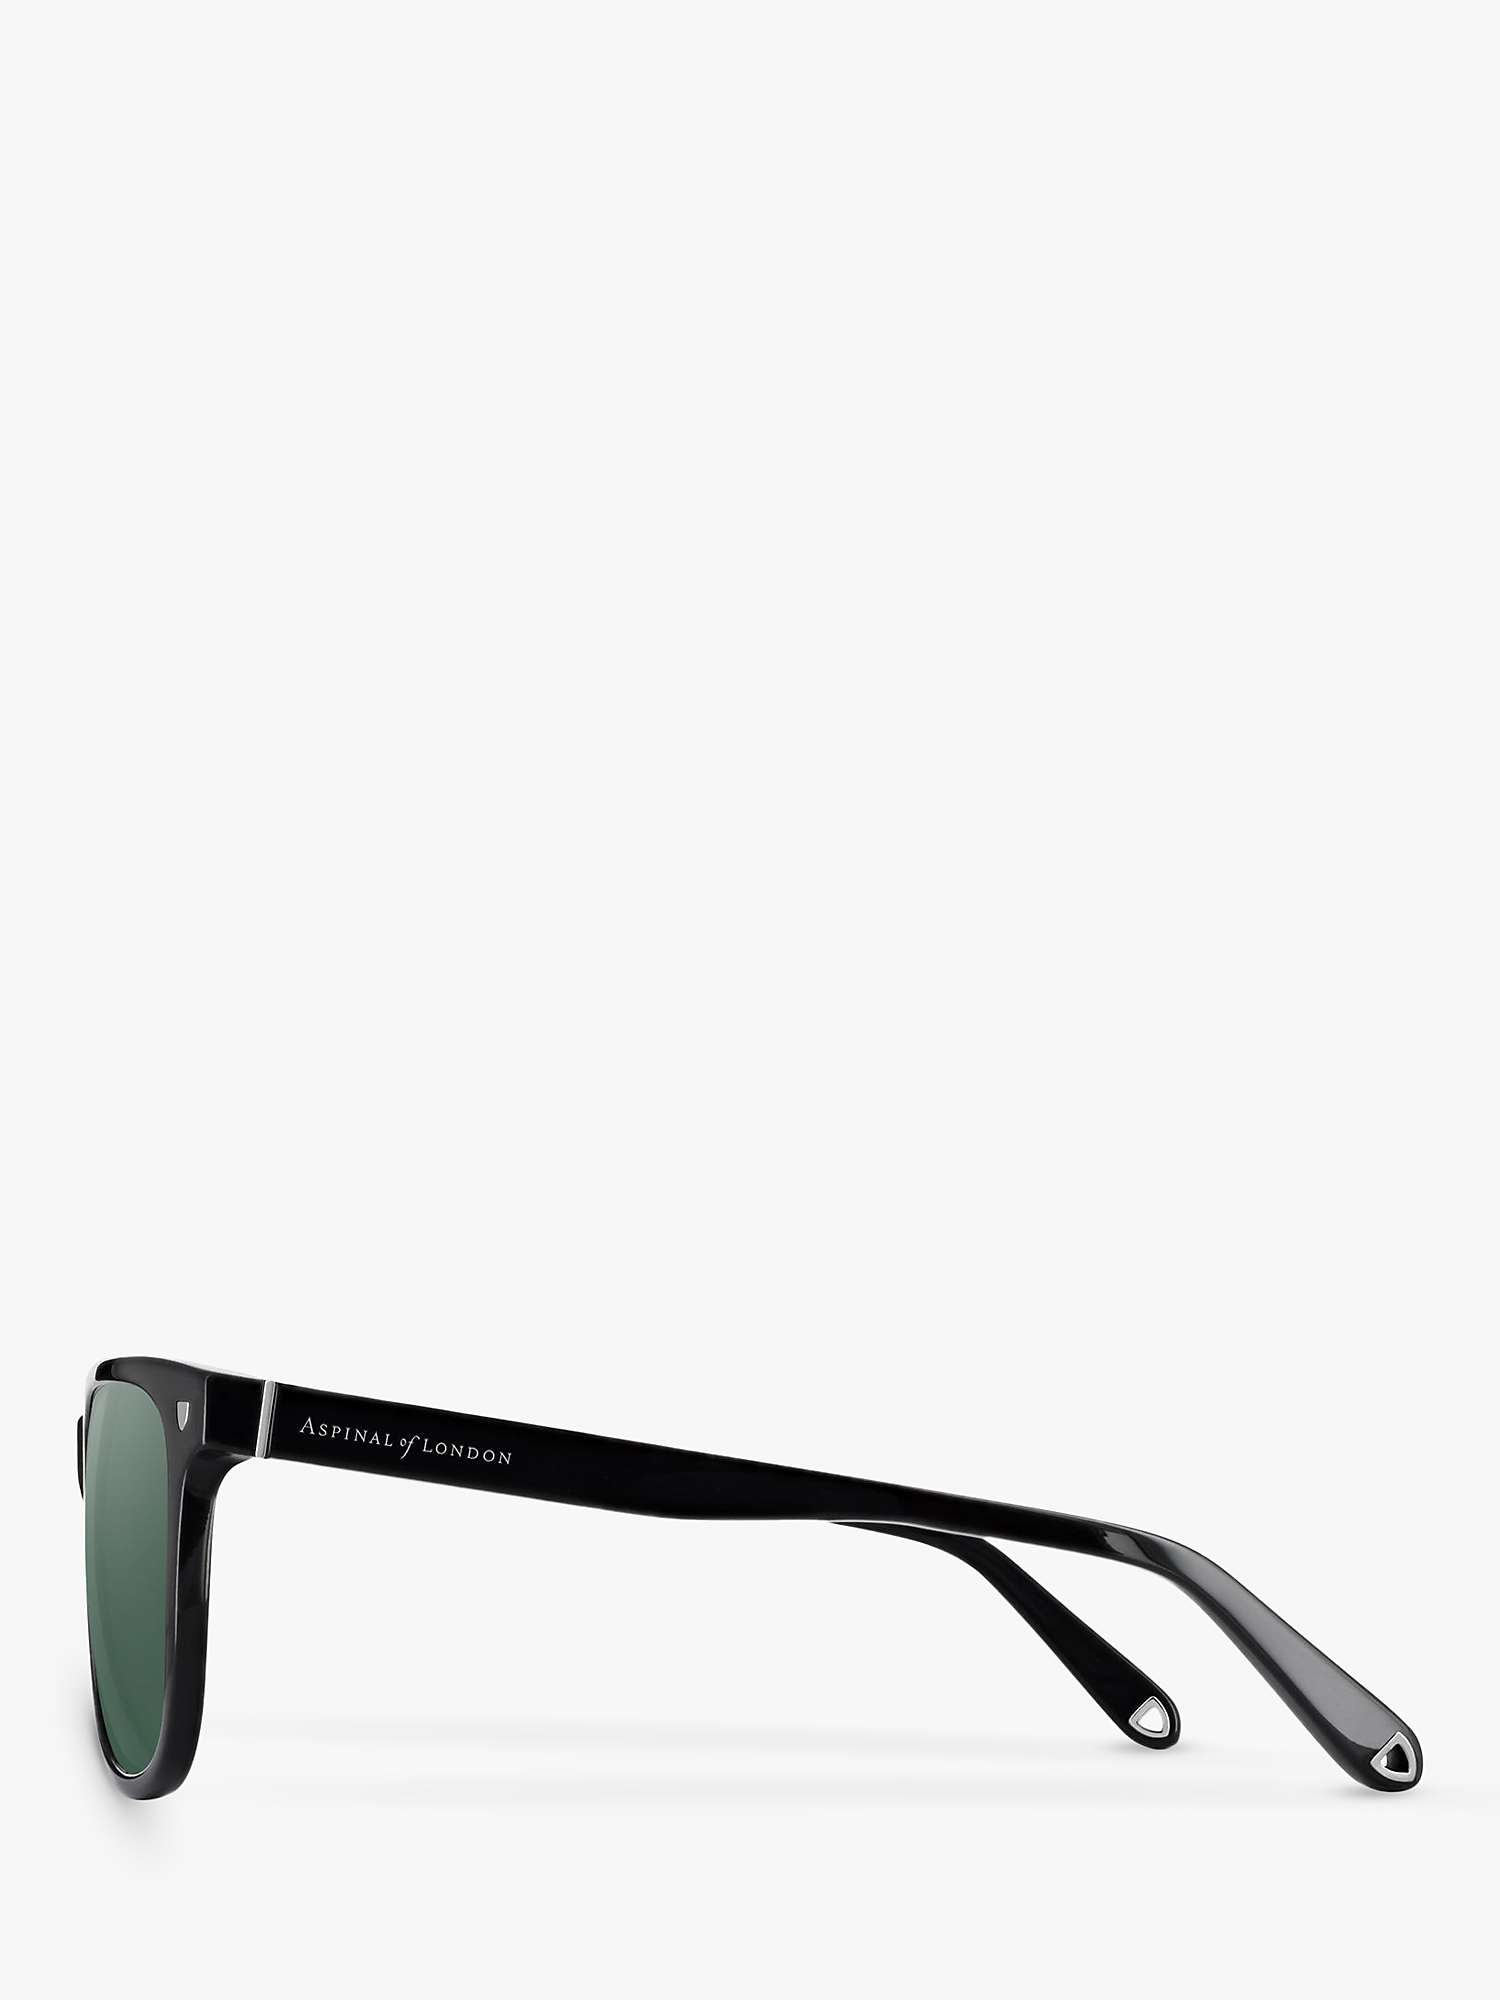 Buy Aspinal of London Men's Milano D-Frame Sunglasses Online at johnlewis.com